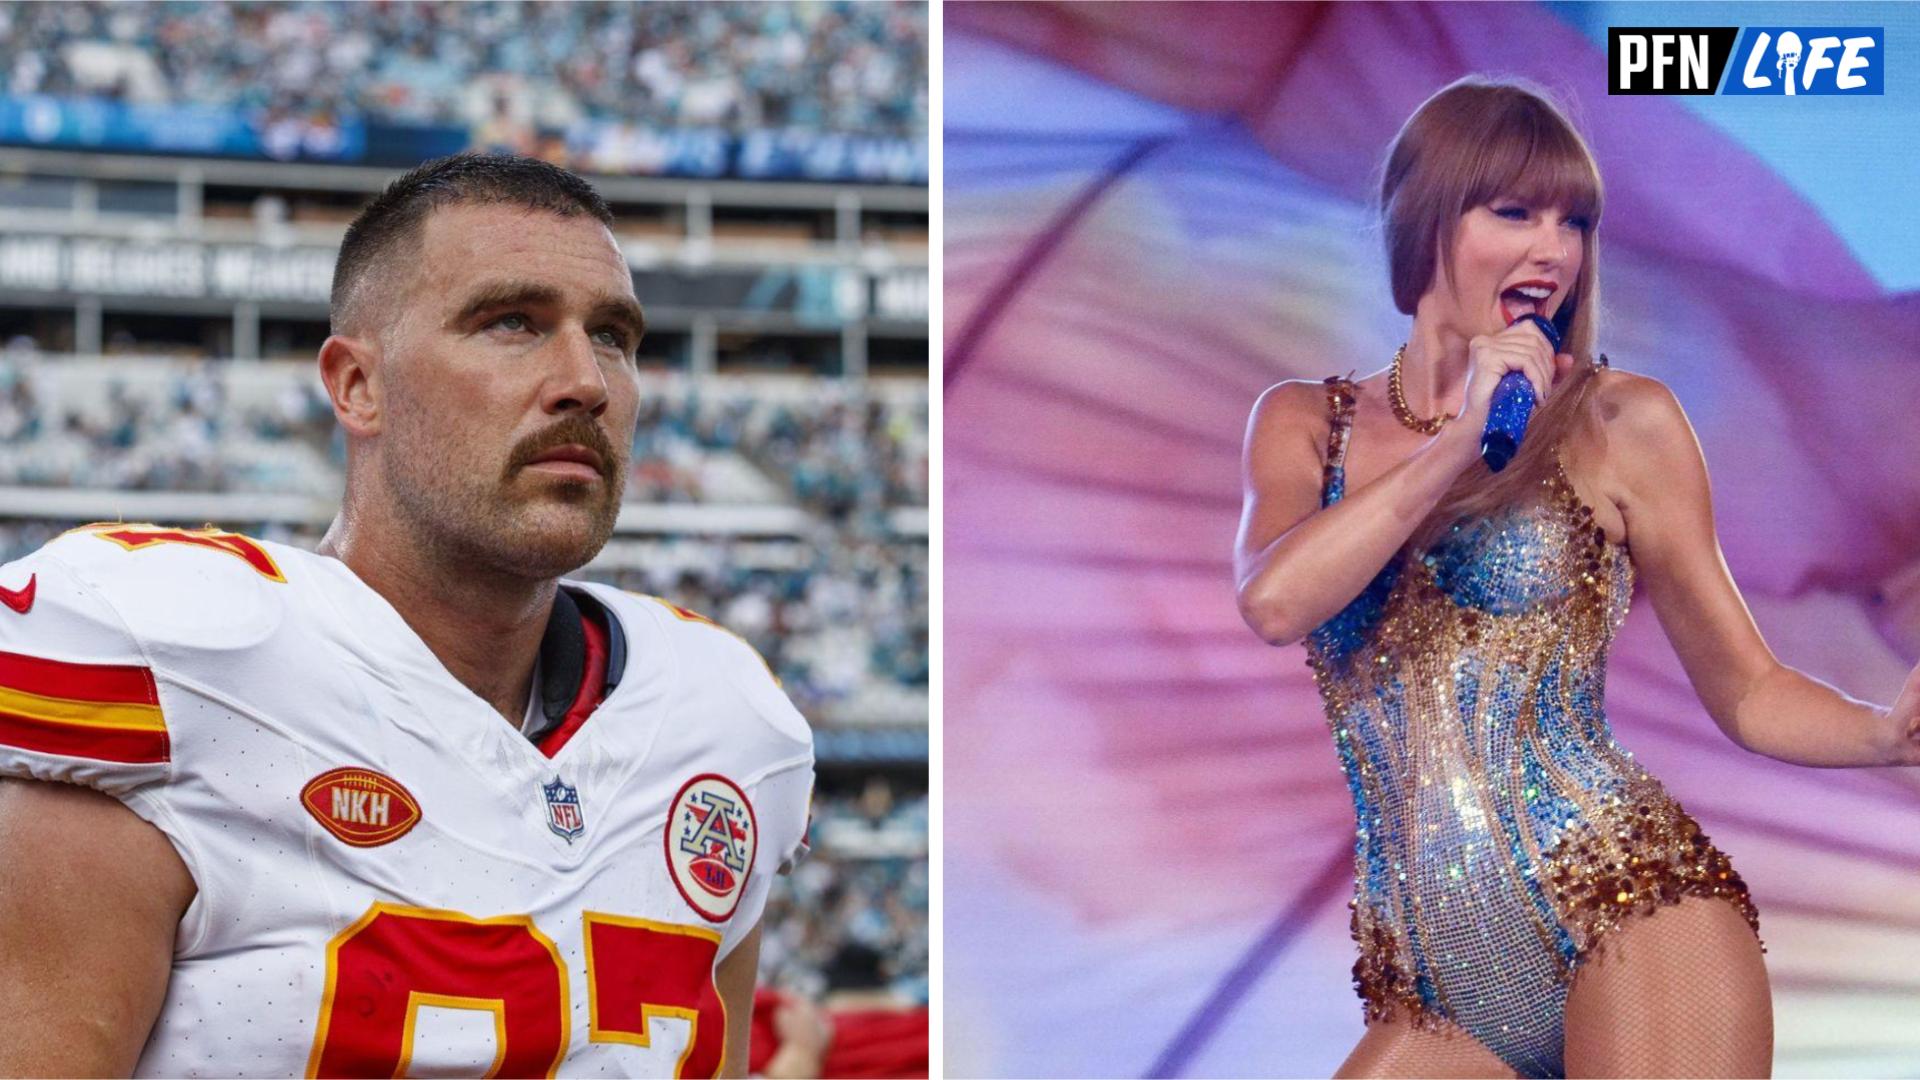 Taylor Swift confirms the rumors — she's a Philadelphia Eagles fan